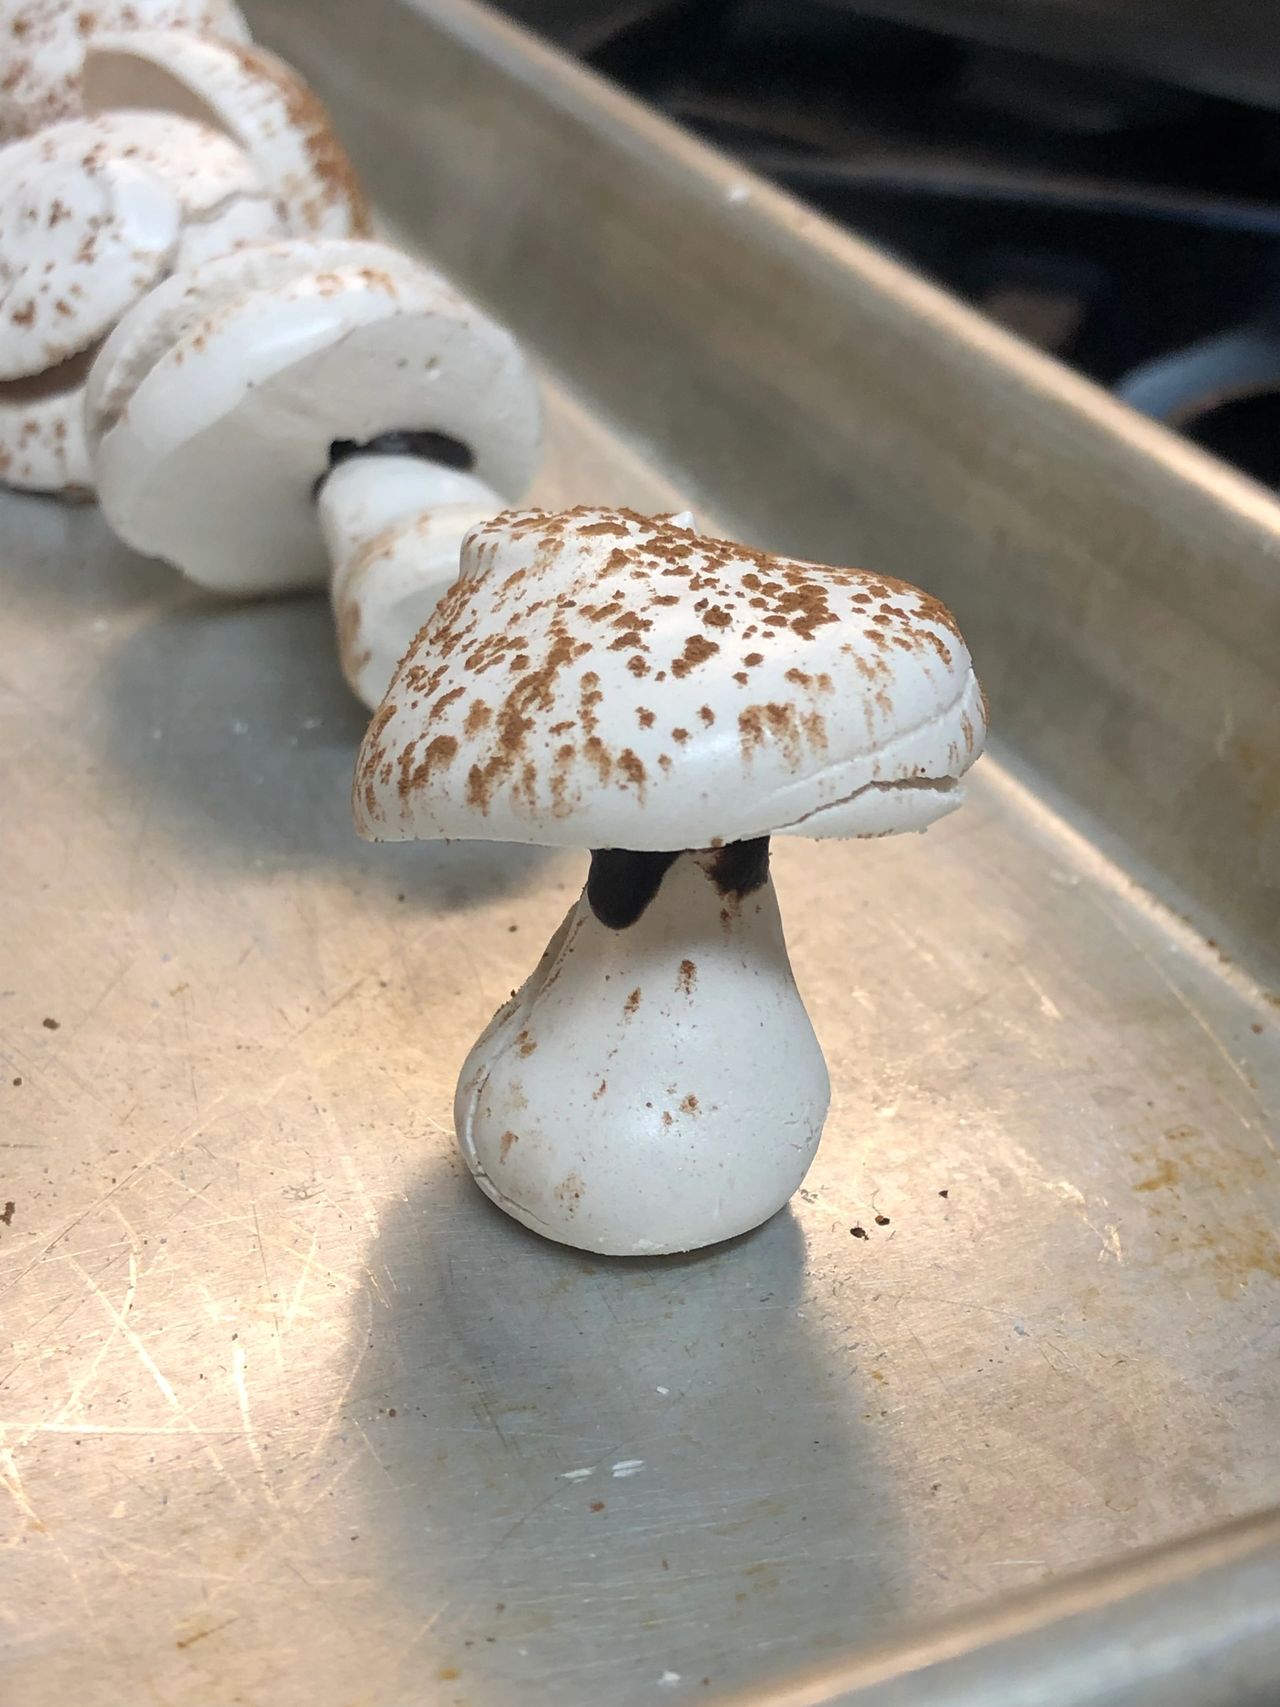 Meringue mushrooms assembled and drying.